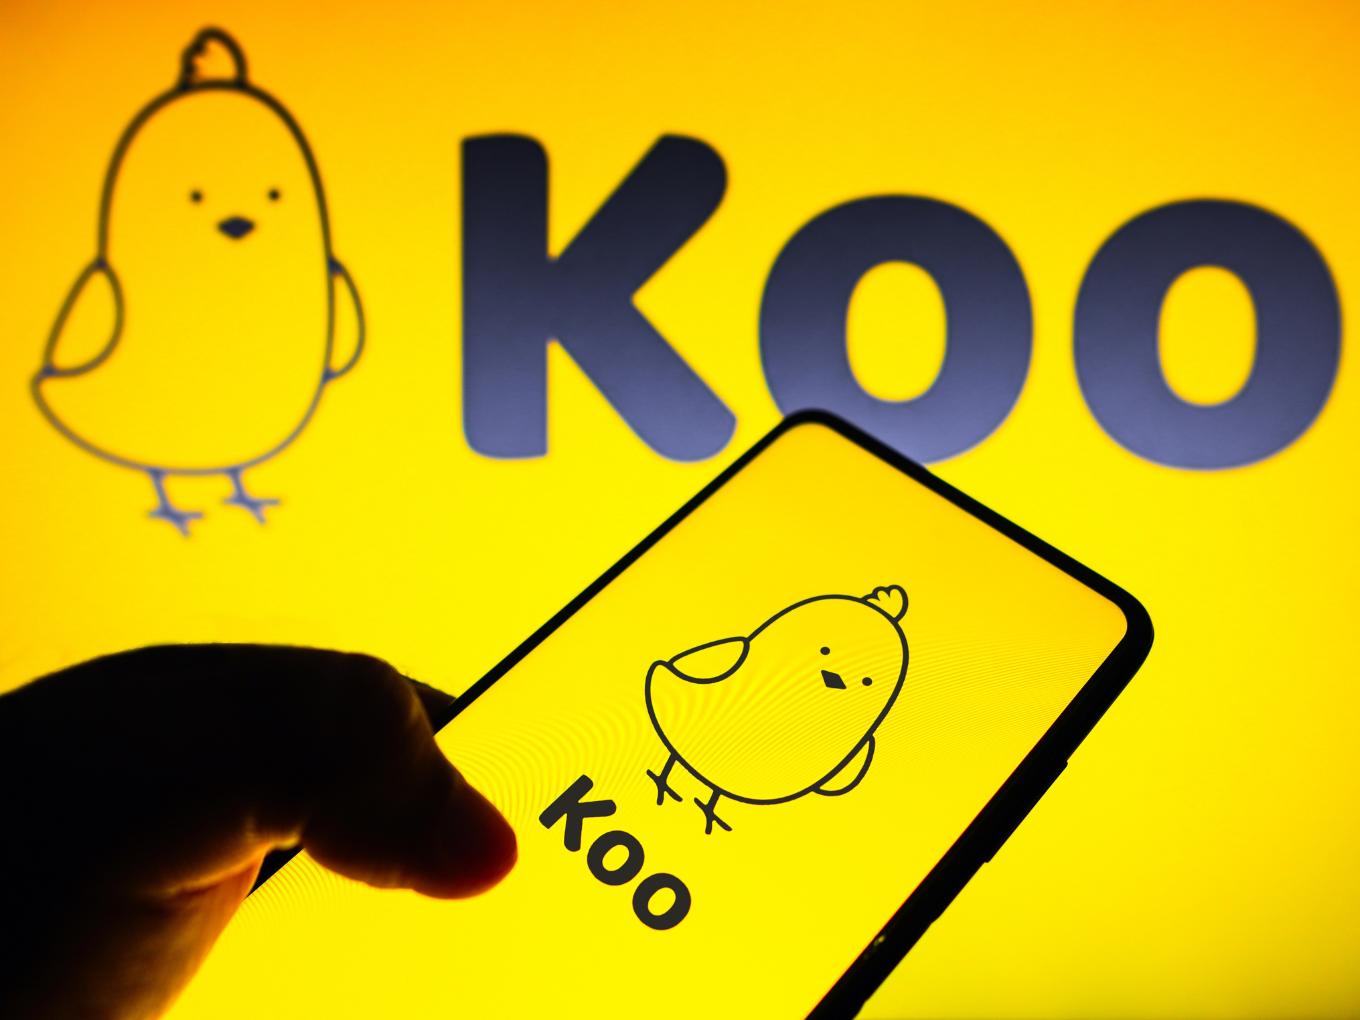 How Tiger Global-Backed Koo Lost Its Mojo & Shut Shop